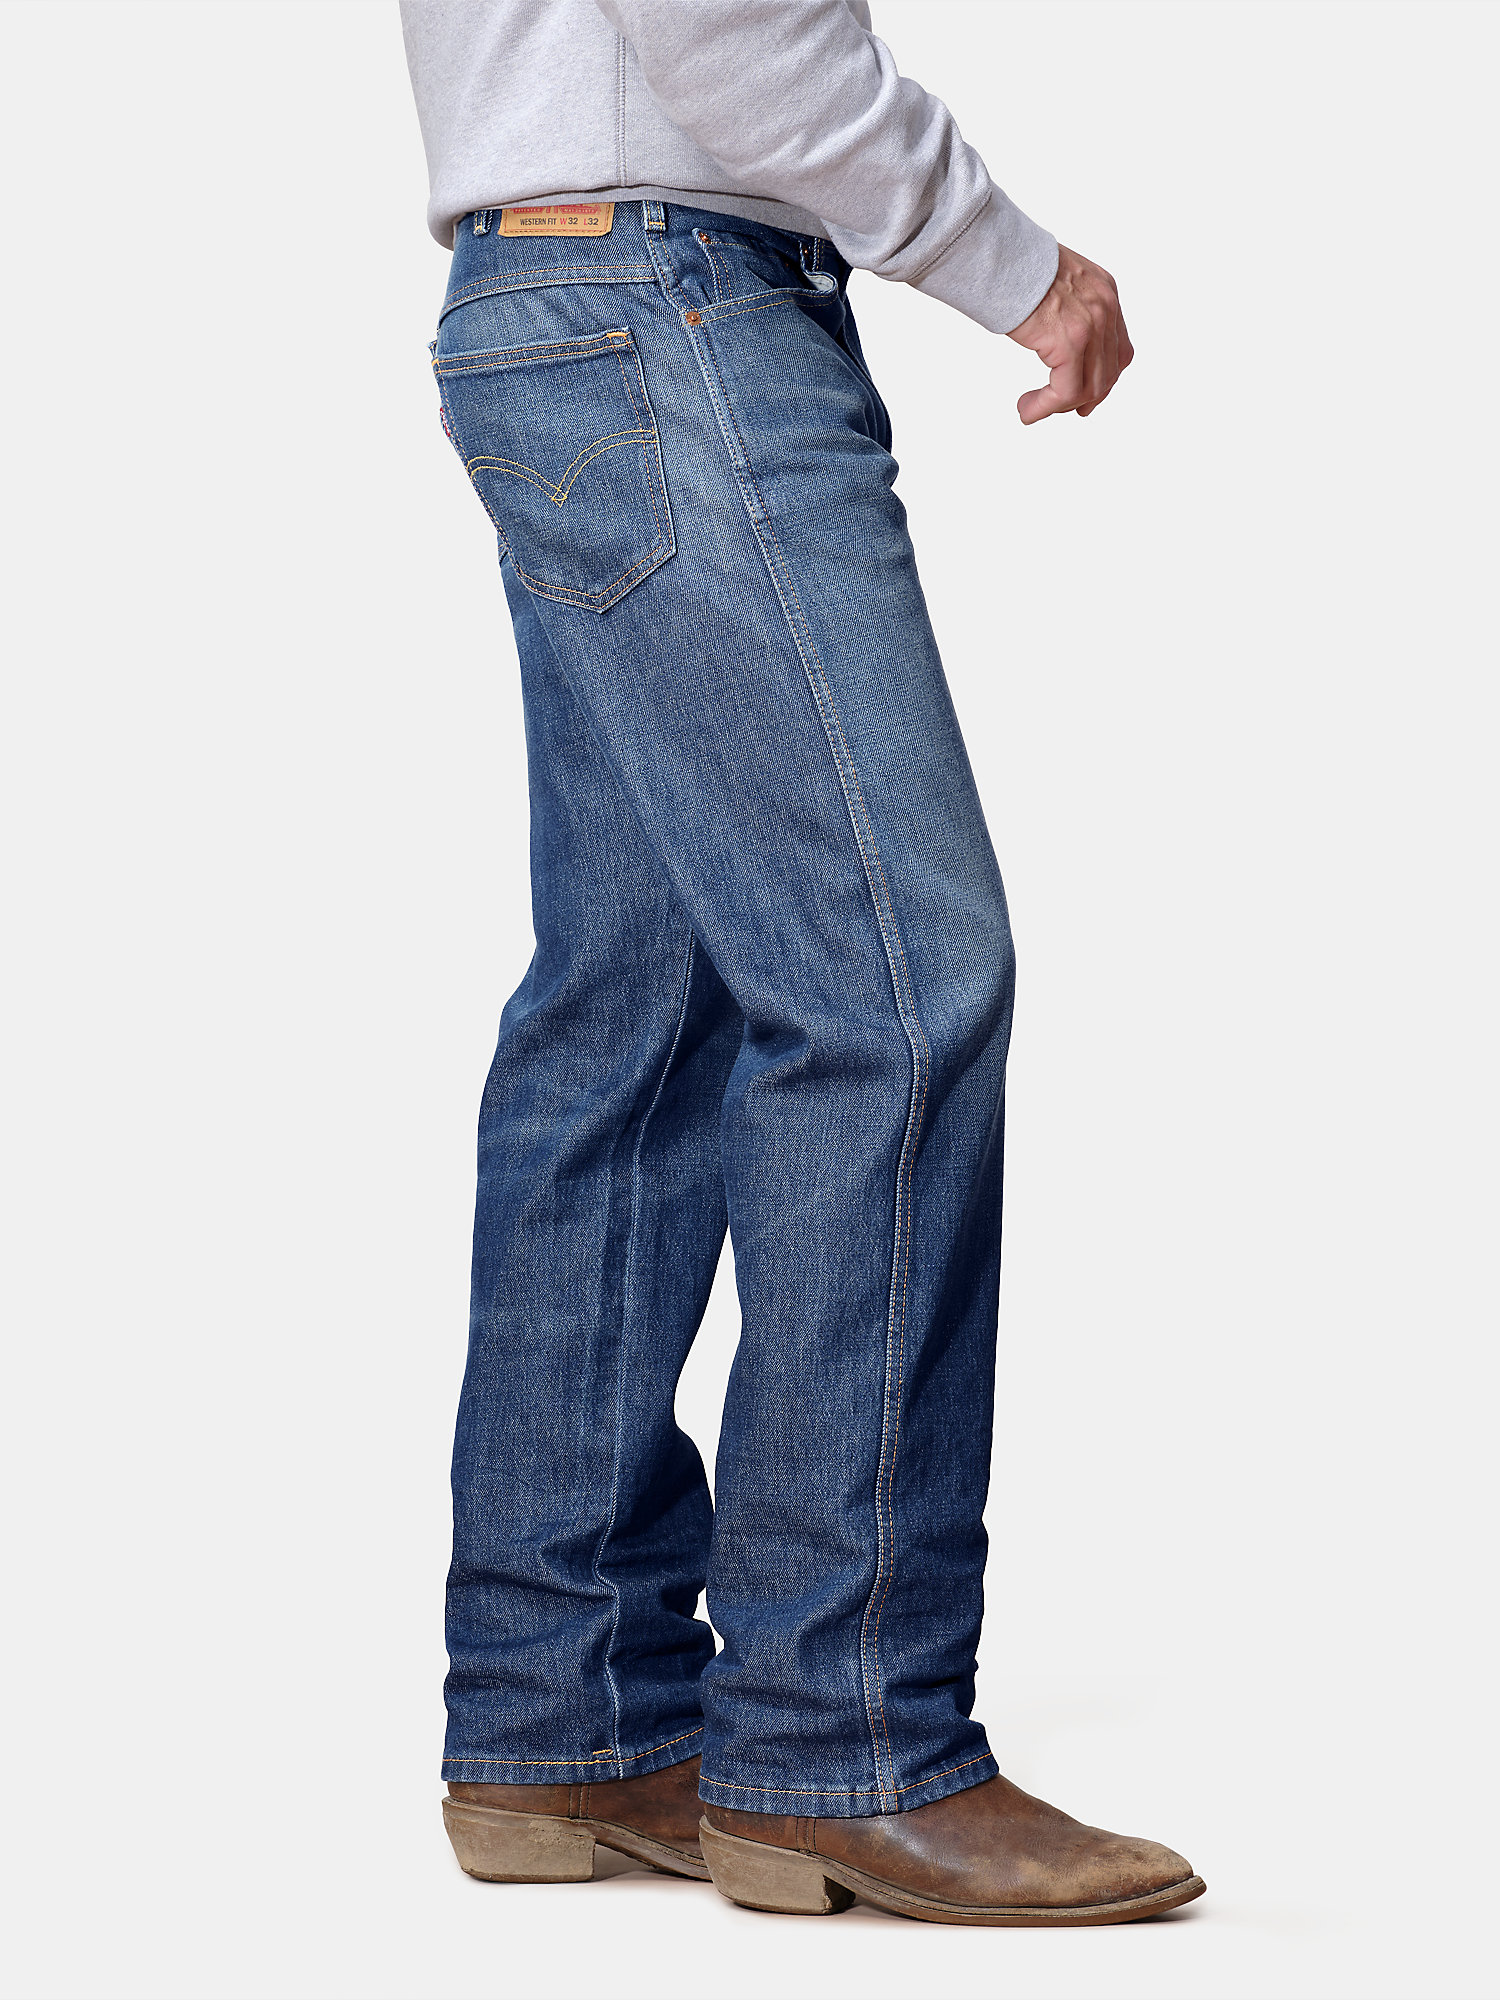 Levi's Men's Western Regular Fit Cowboy Jeans - image 5 of 9